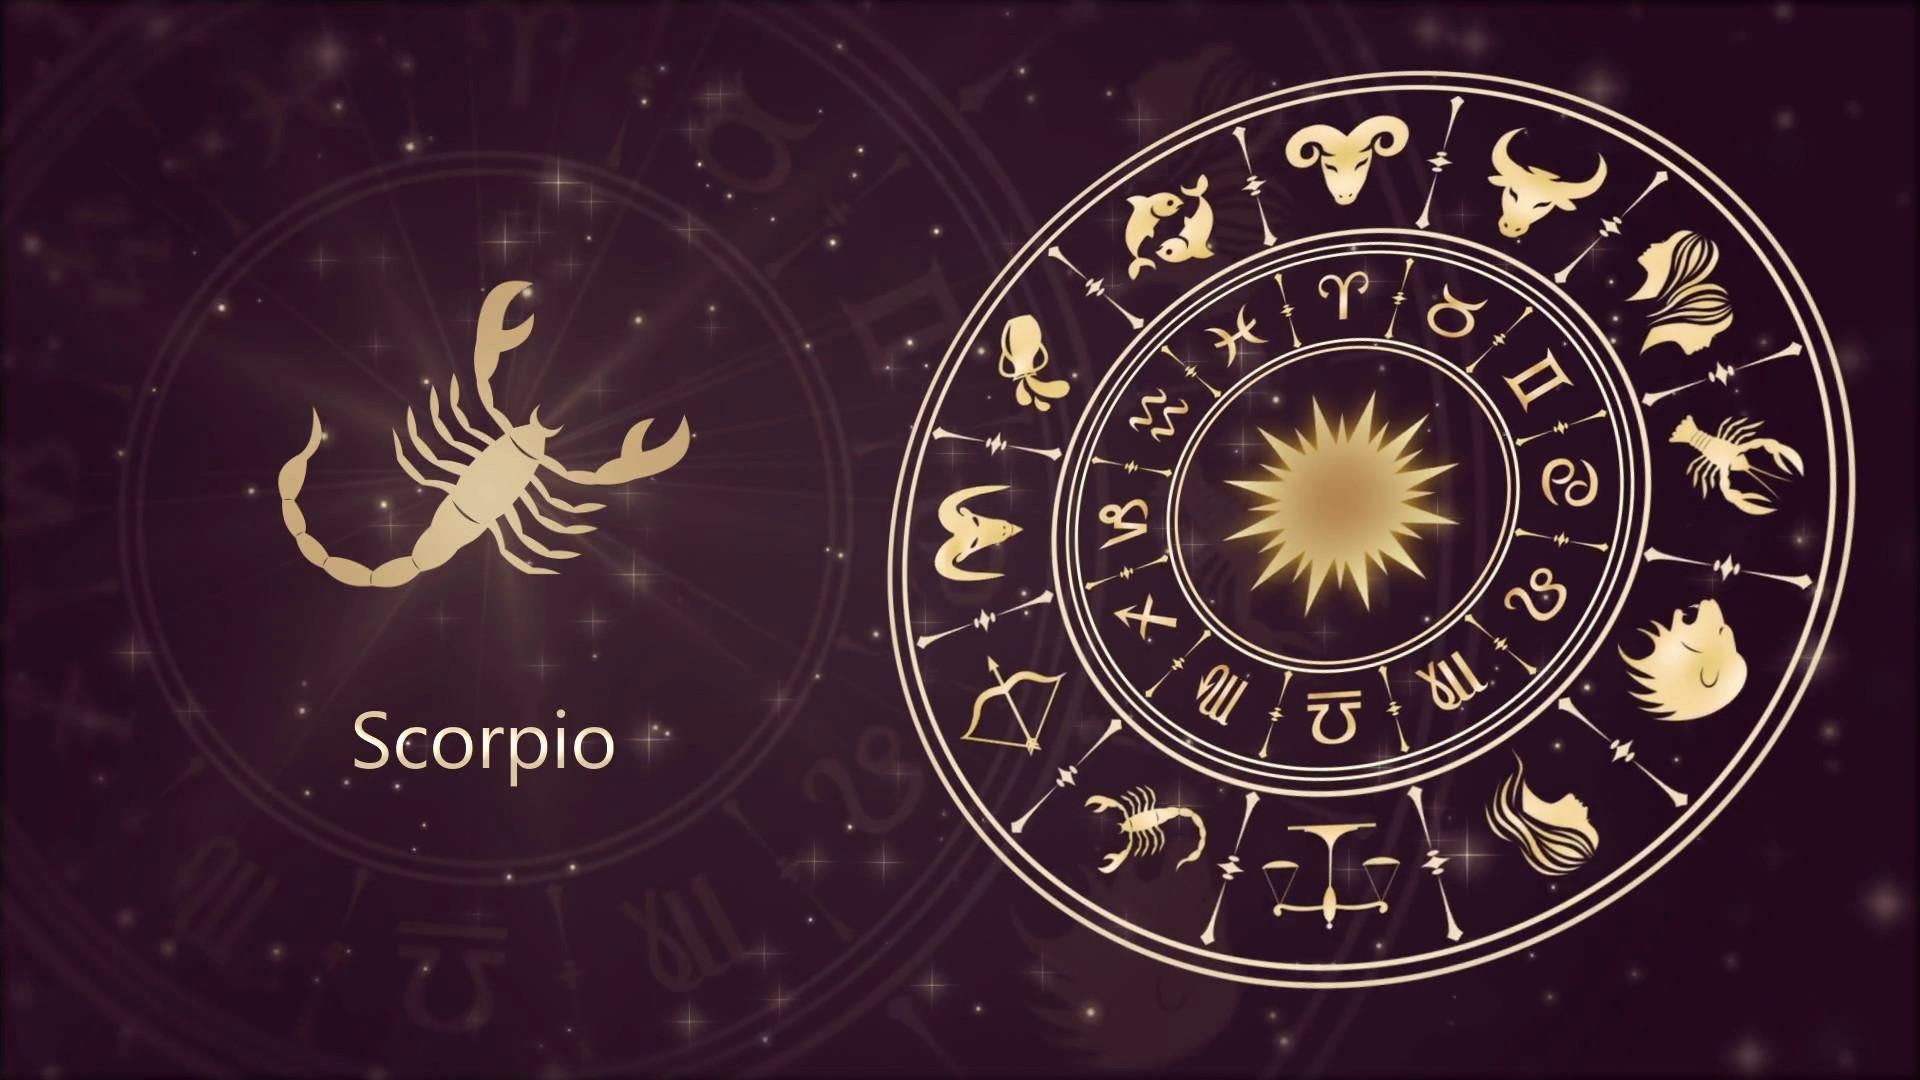 Scorpio Horoscope 2021 Predictions for Love, Career, Money, Health, Family and Personality. - Scorpio